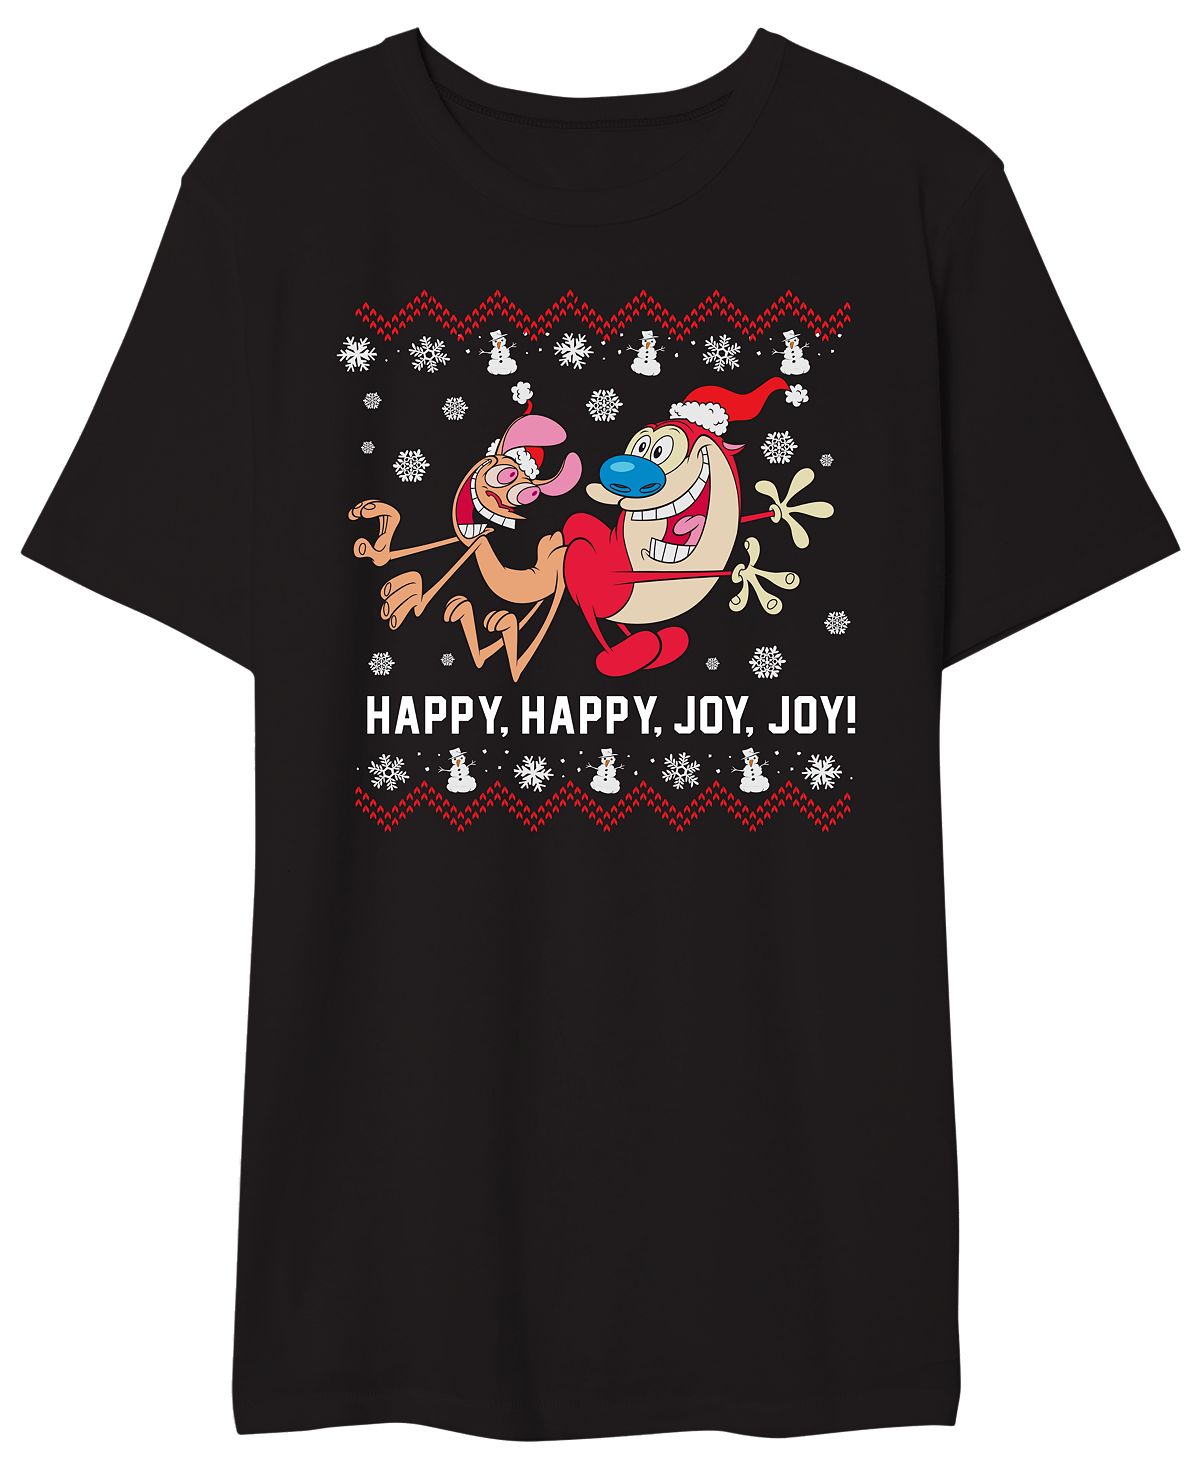 Мужская футболка с графическим рисунком happy happy joy joy AIRWAVES, мульти joy